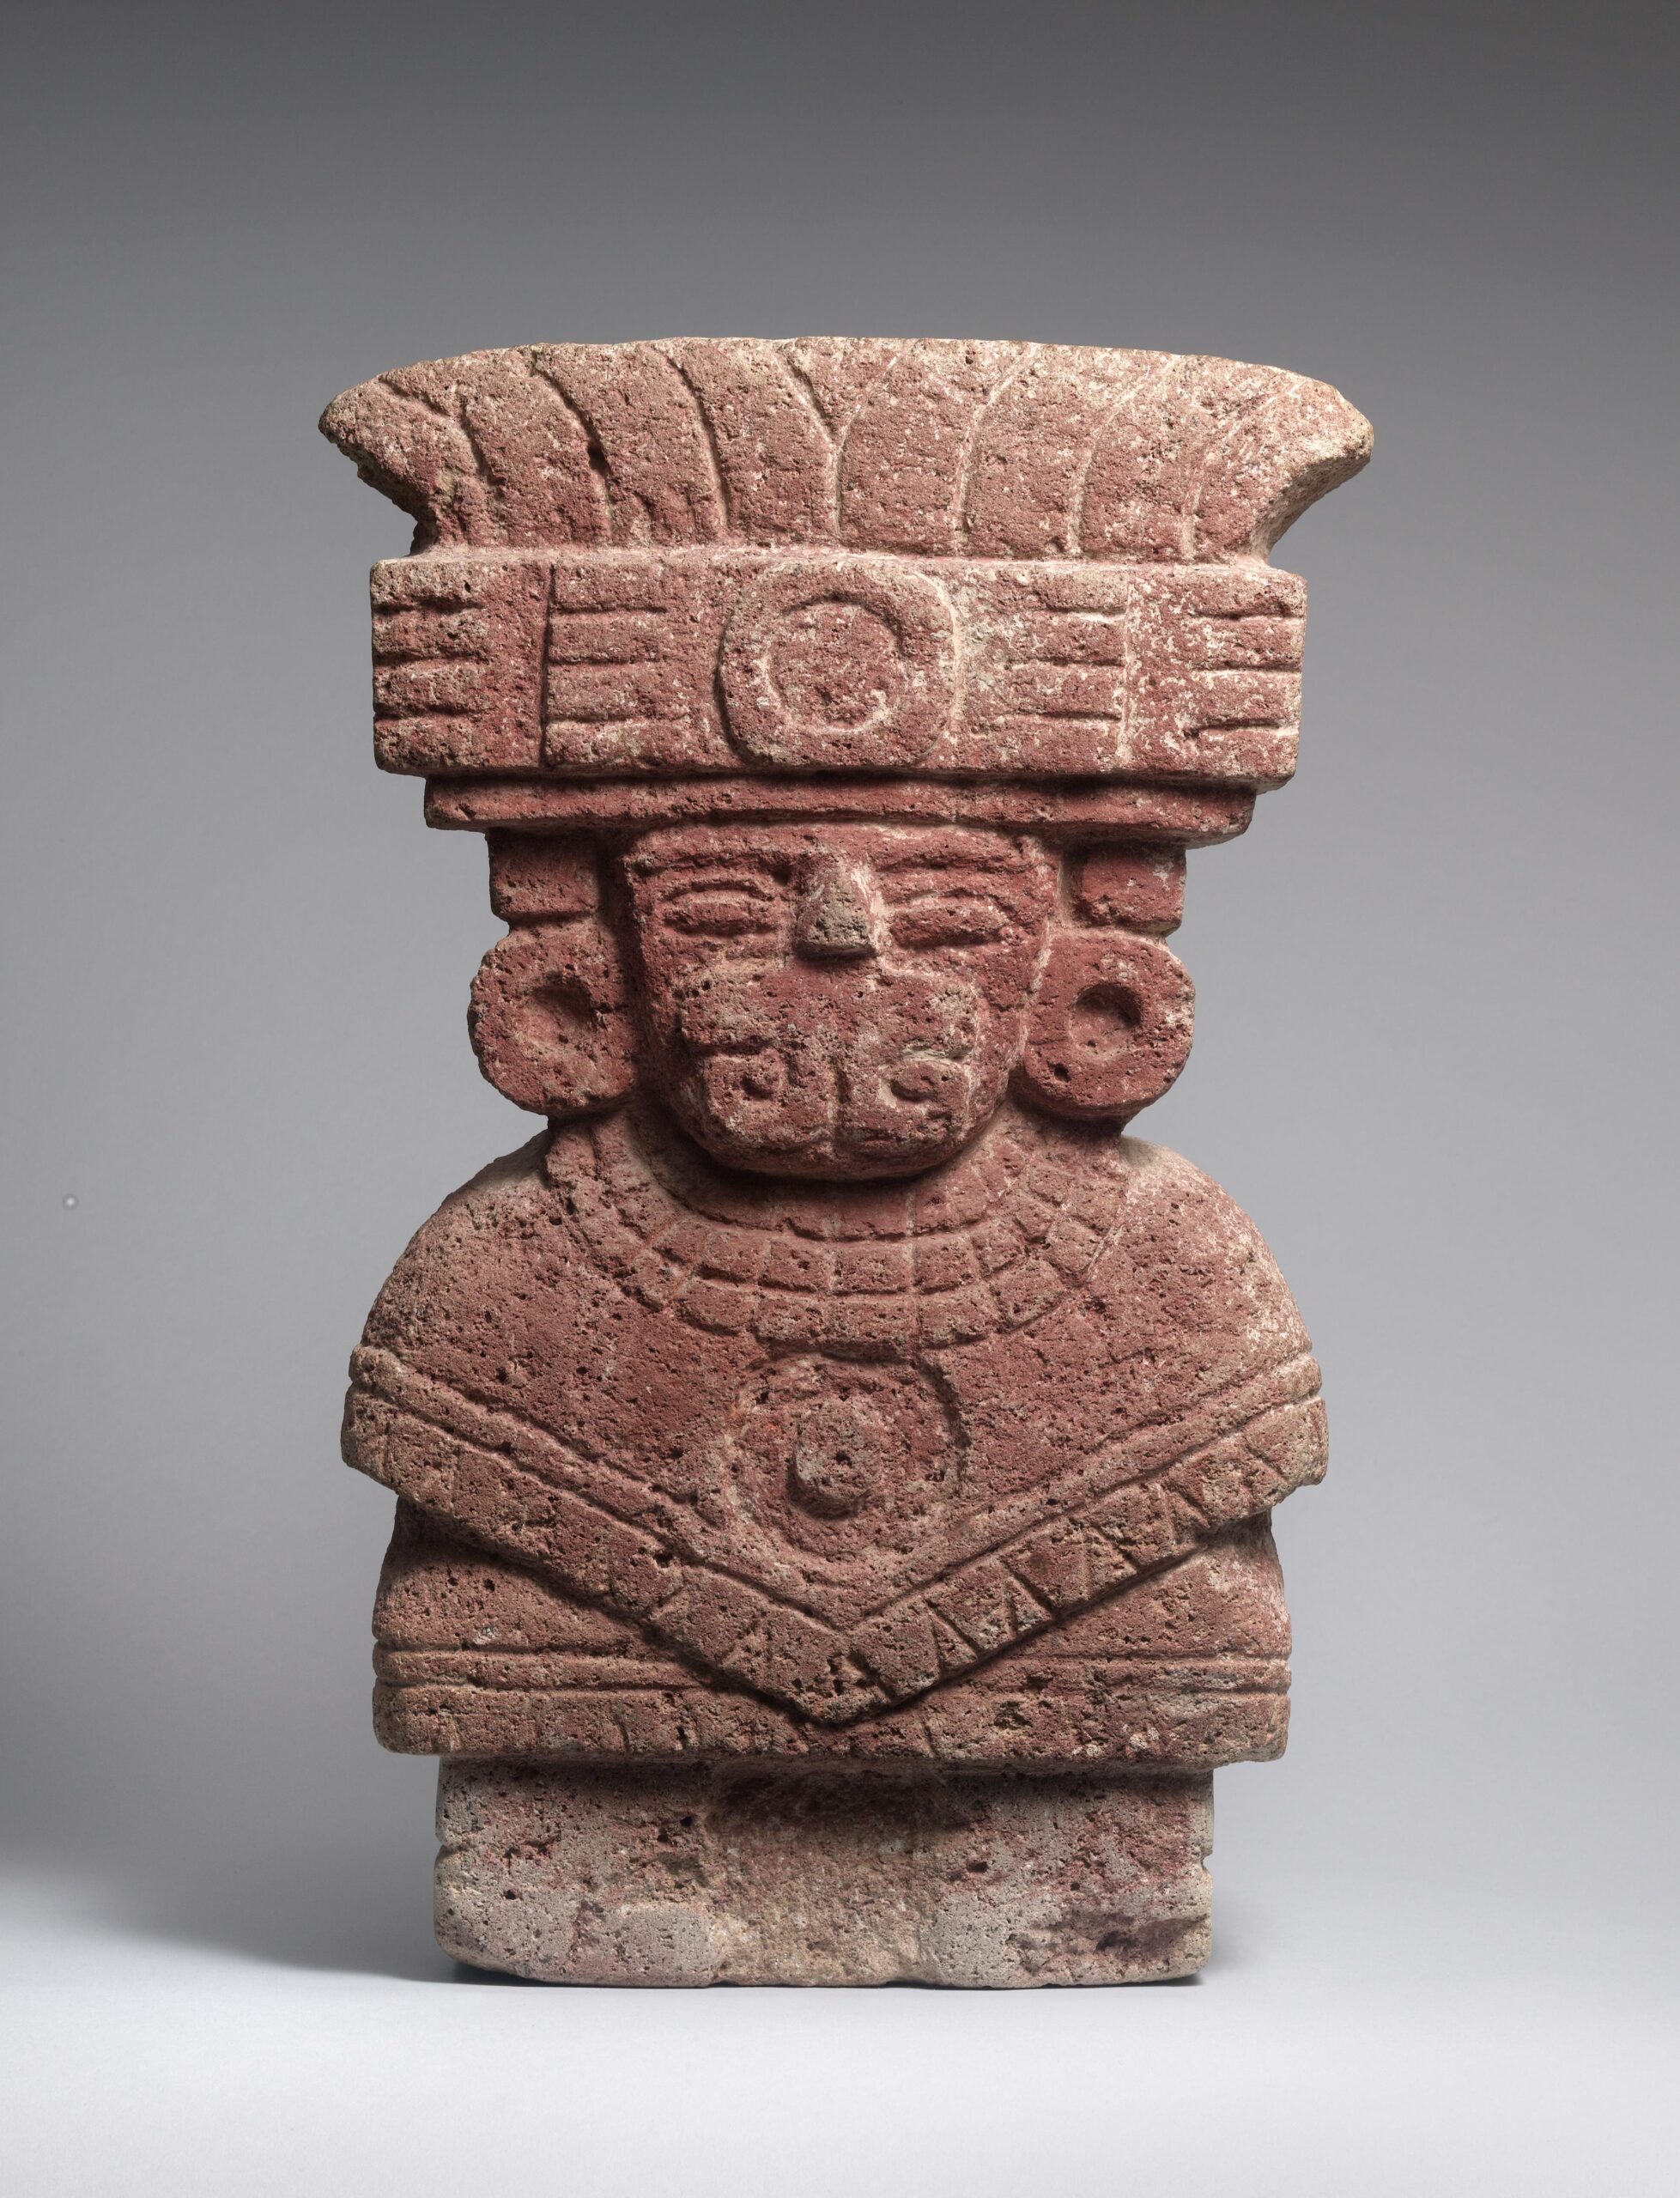 Seated stone figure with an elaborate headdress, garment, and ear spools.